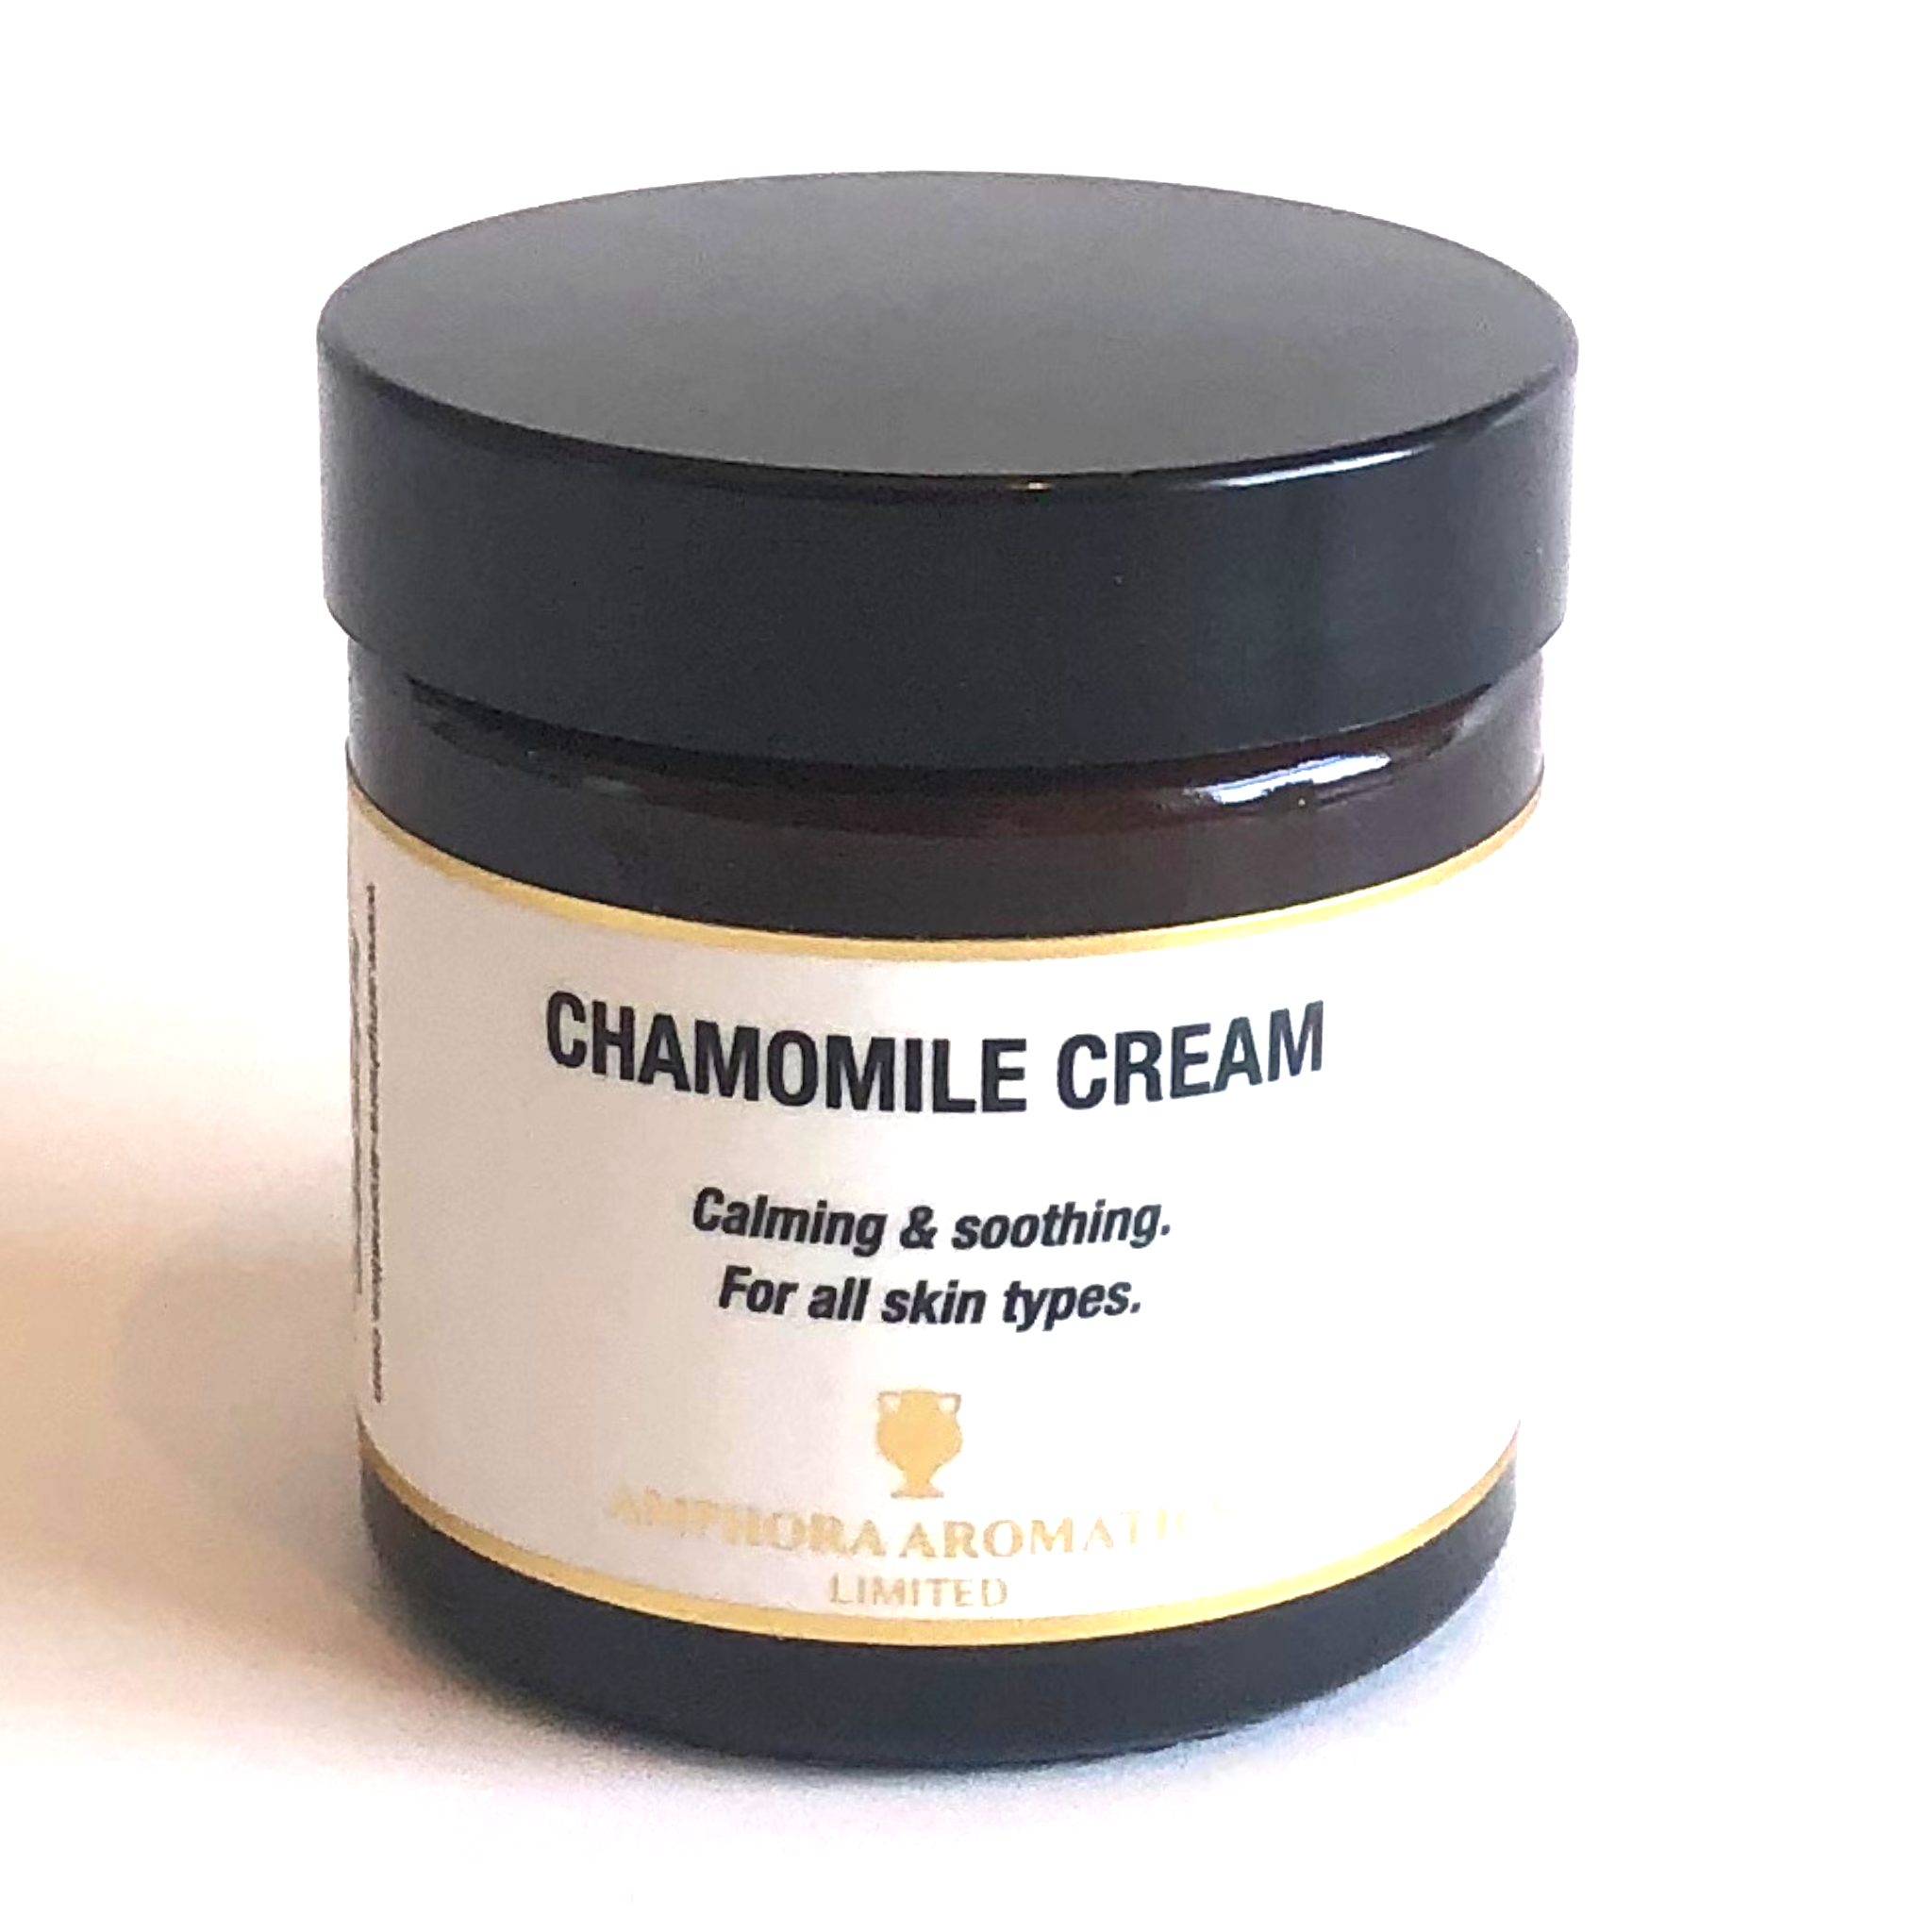 Chamomile Cream by Amphora Aromatics